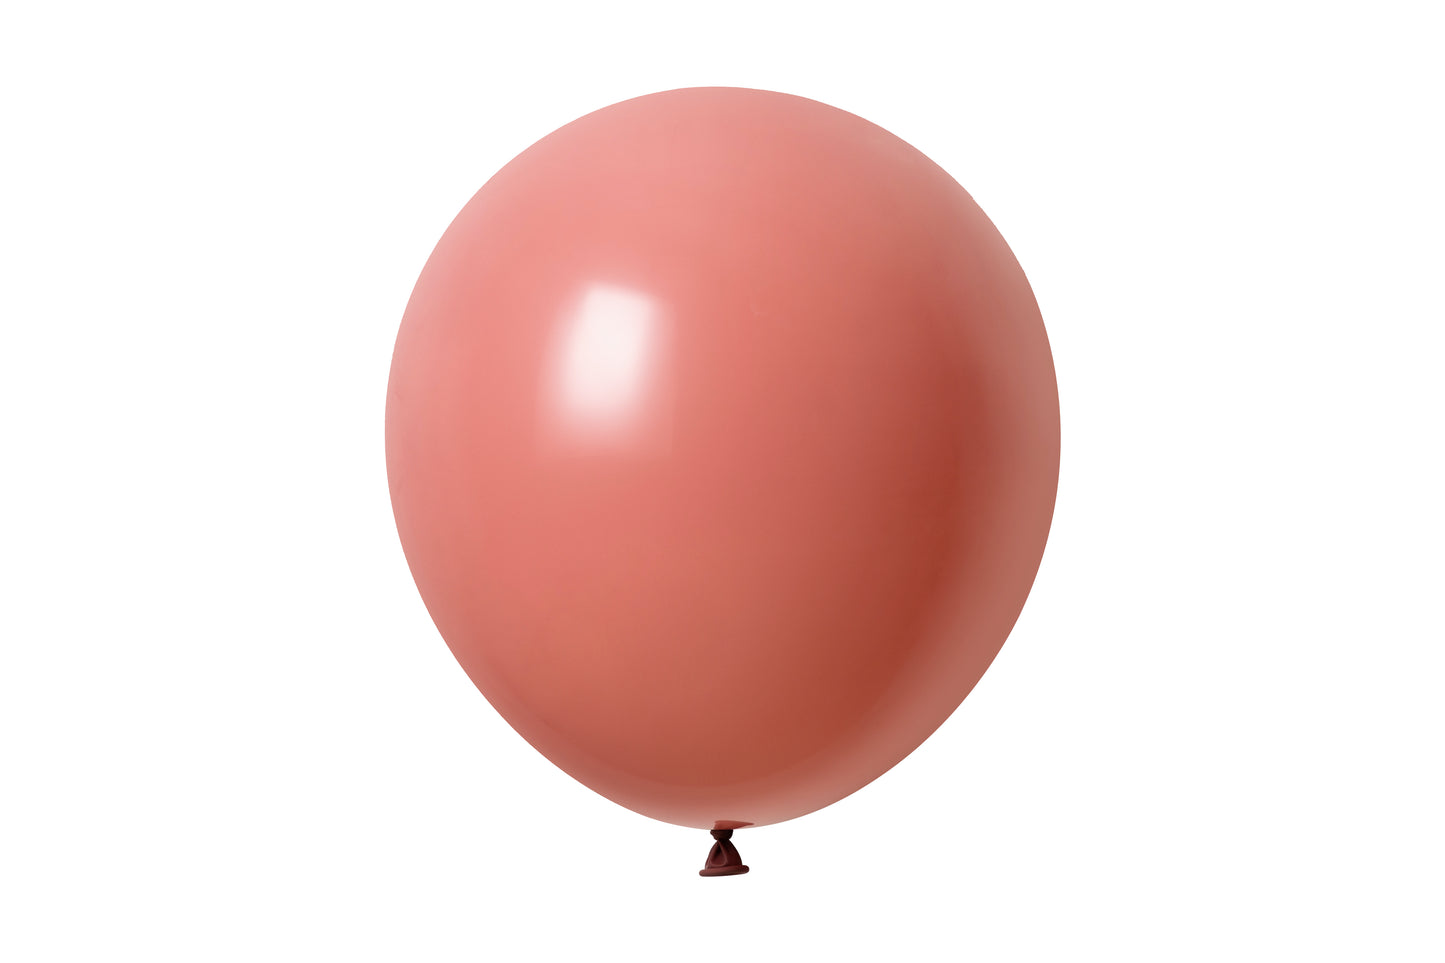 Winntex Premium 36" Latex Balloon - Rosewood - 5ct